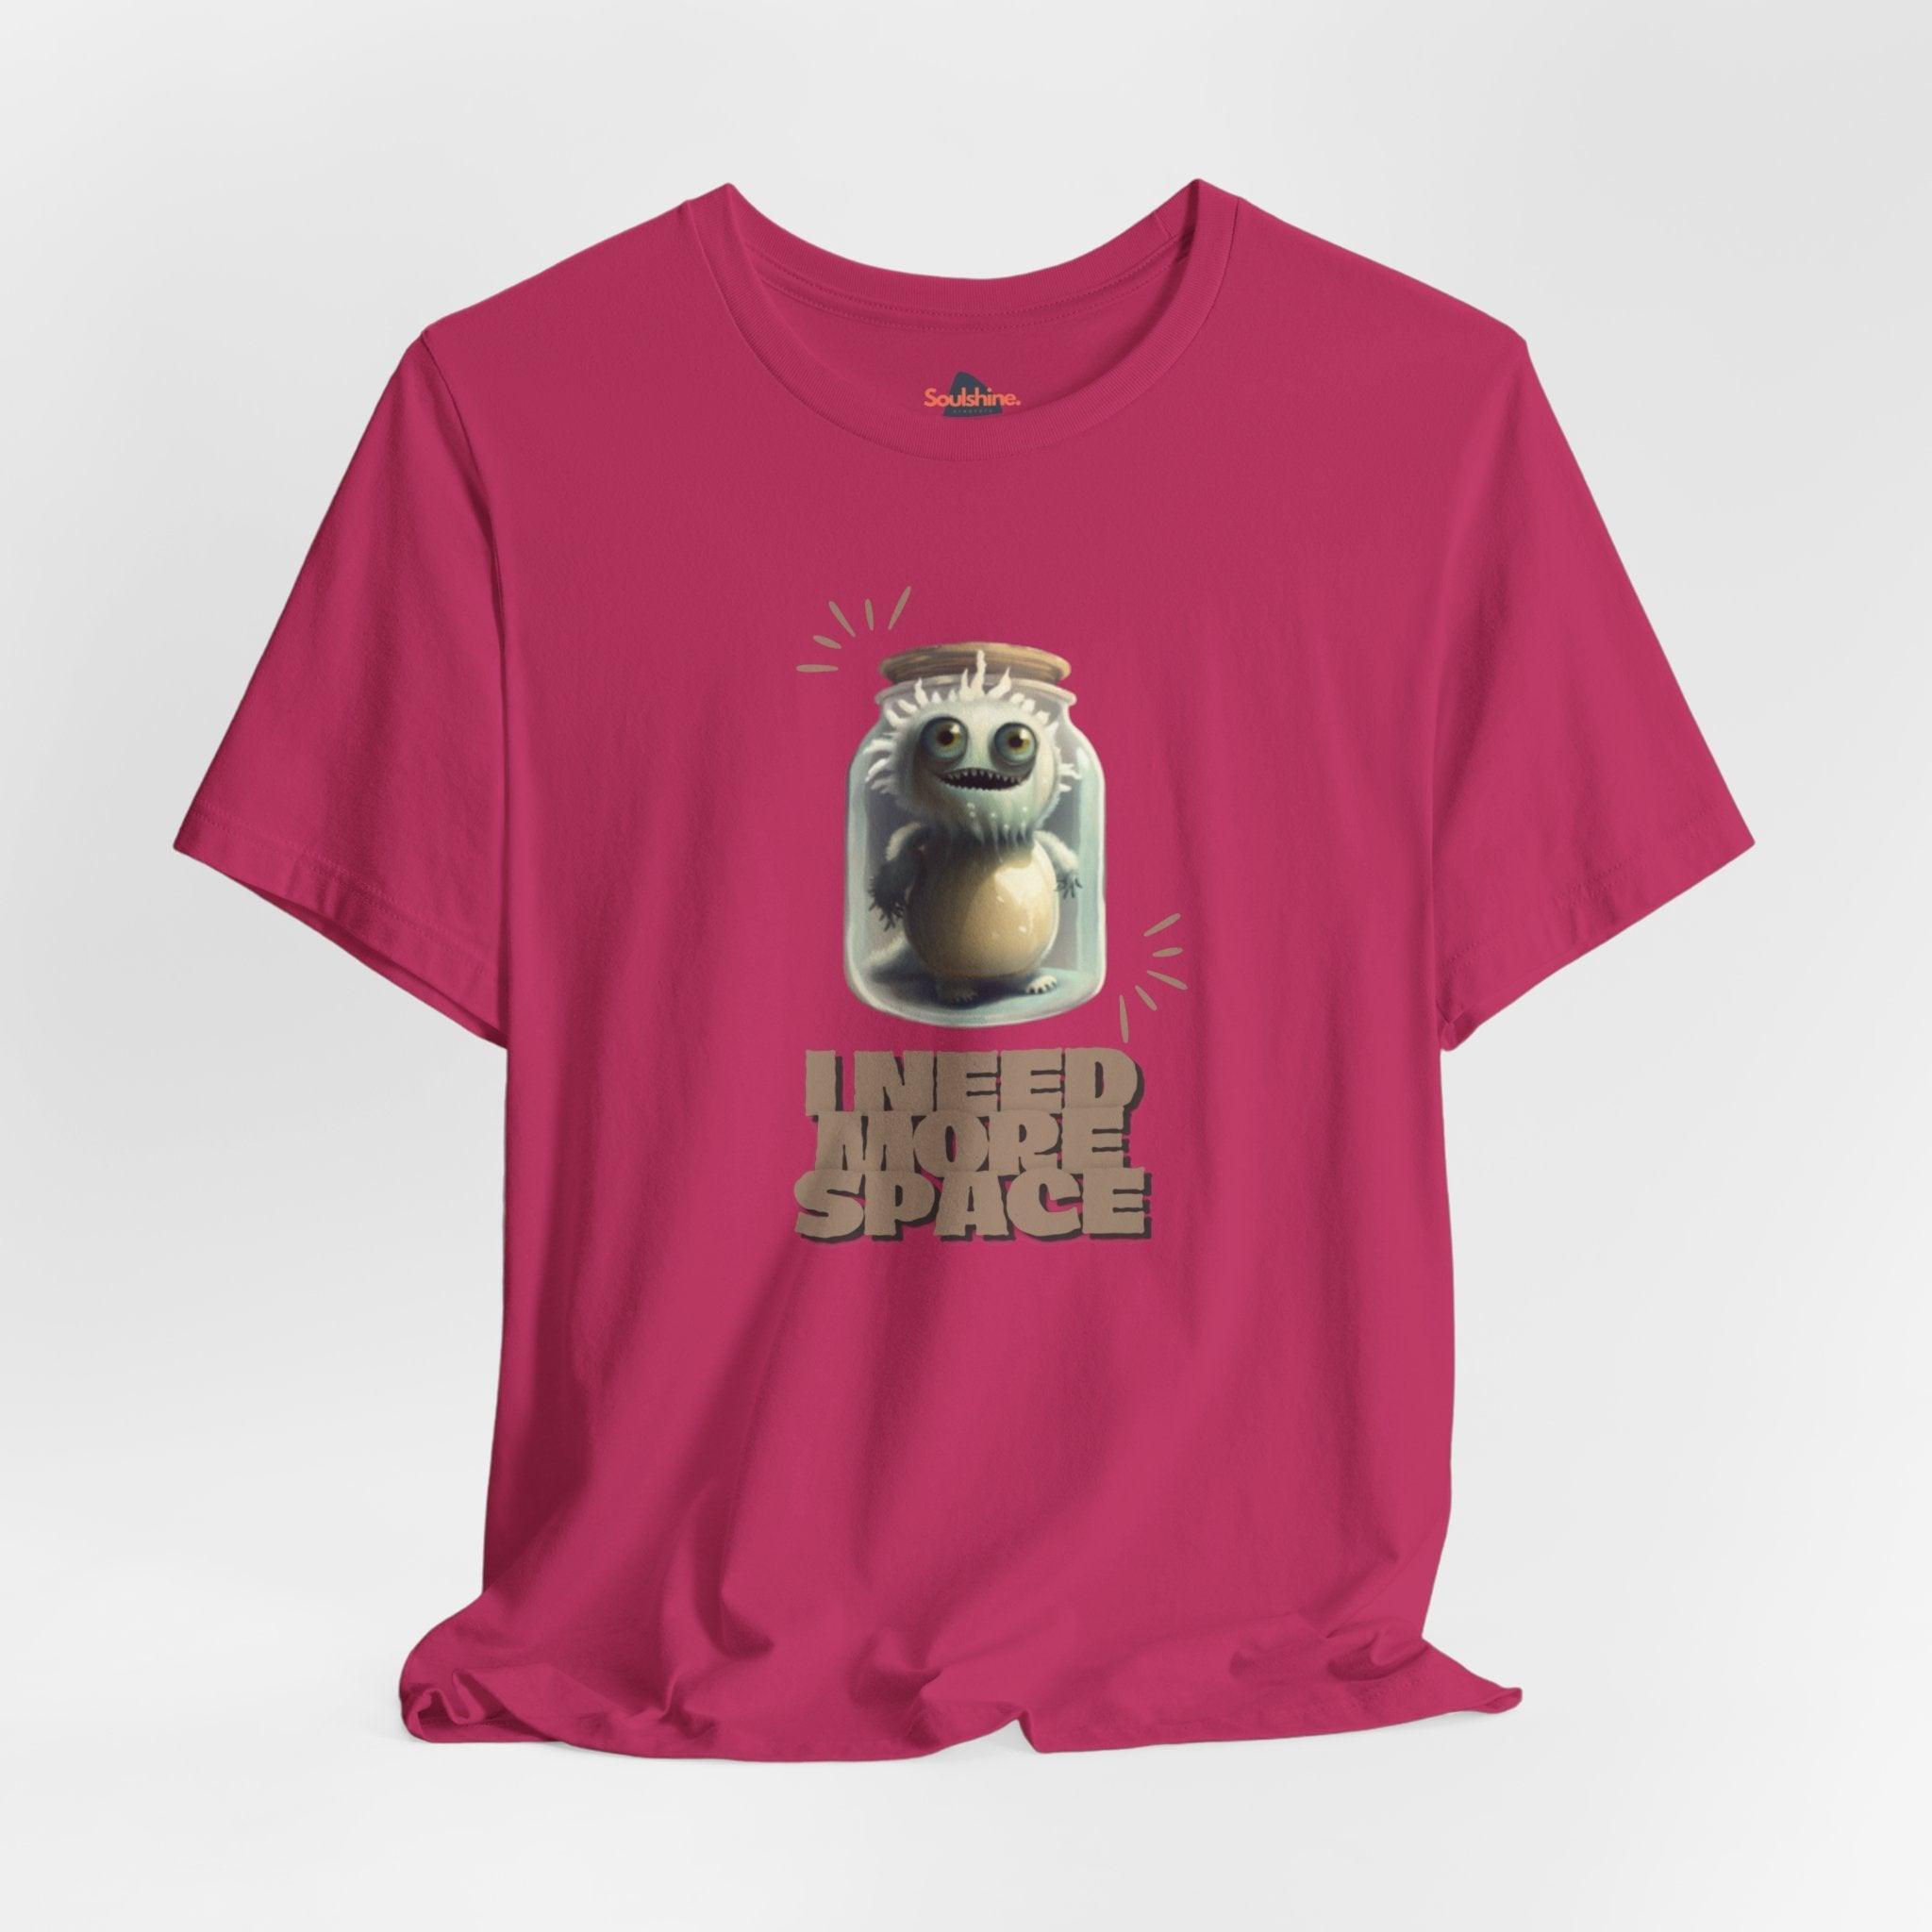 I need more space - Funny T-Shirt - Unisex Jersey Short Sleeve Tee - US Berry S T-Shirt by Soulshinecreators | Soulshinecreators